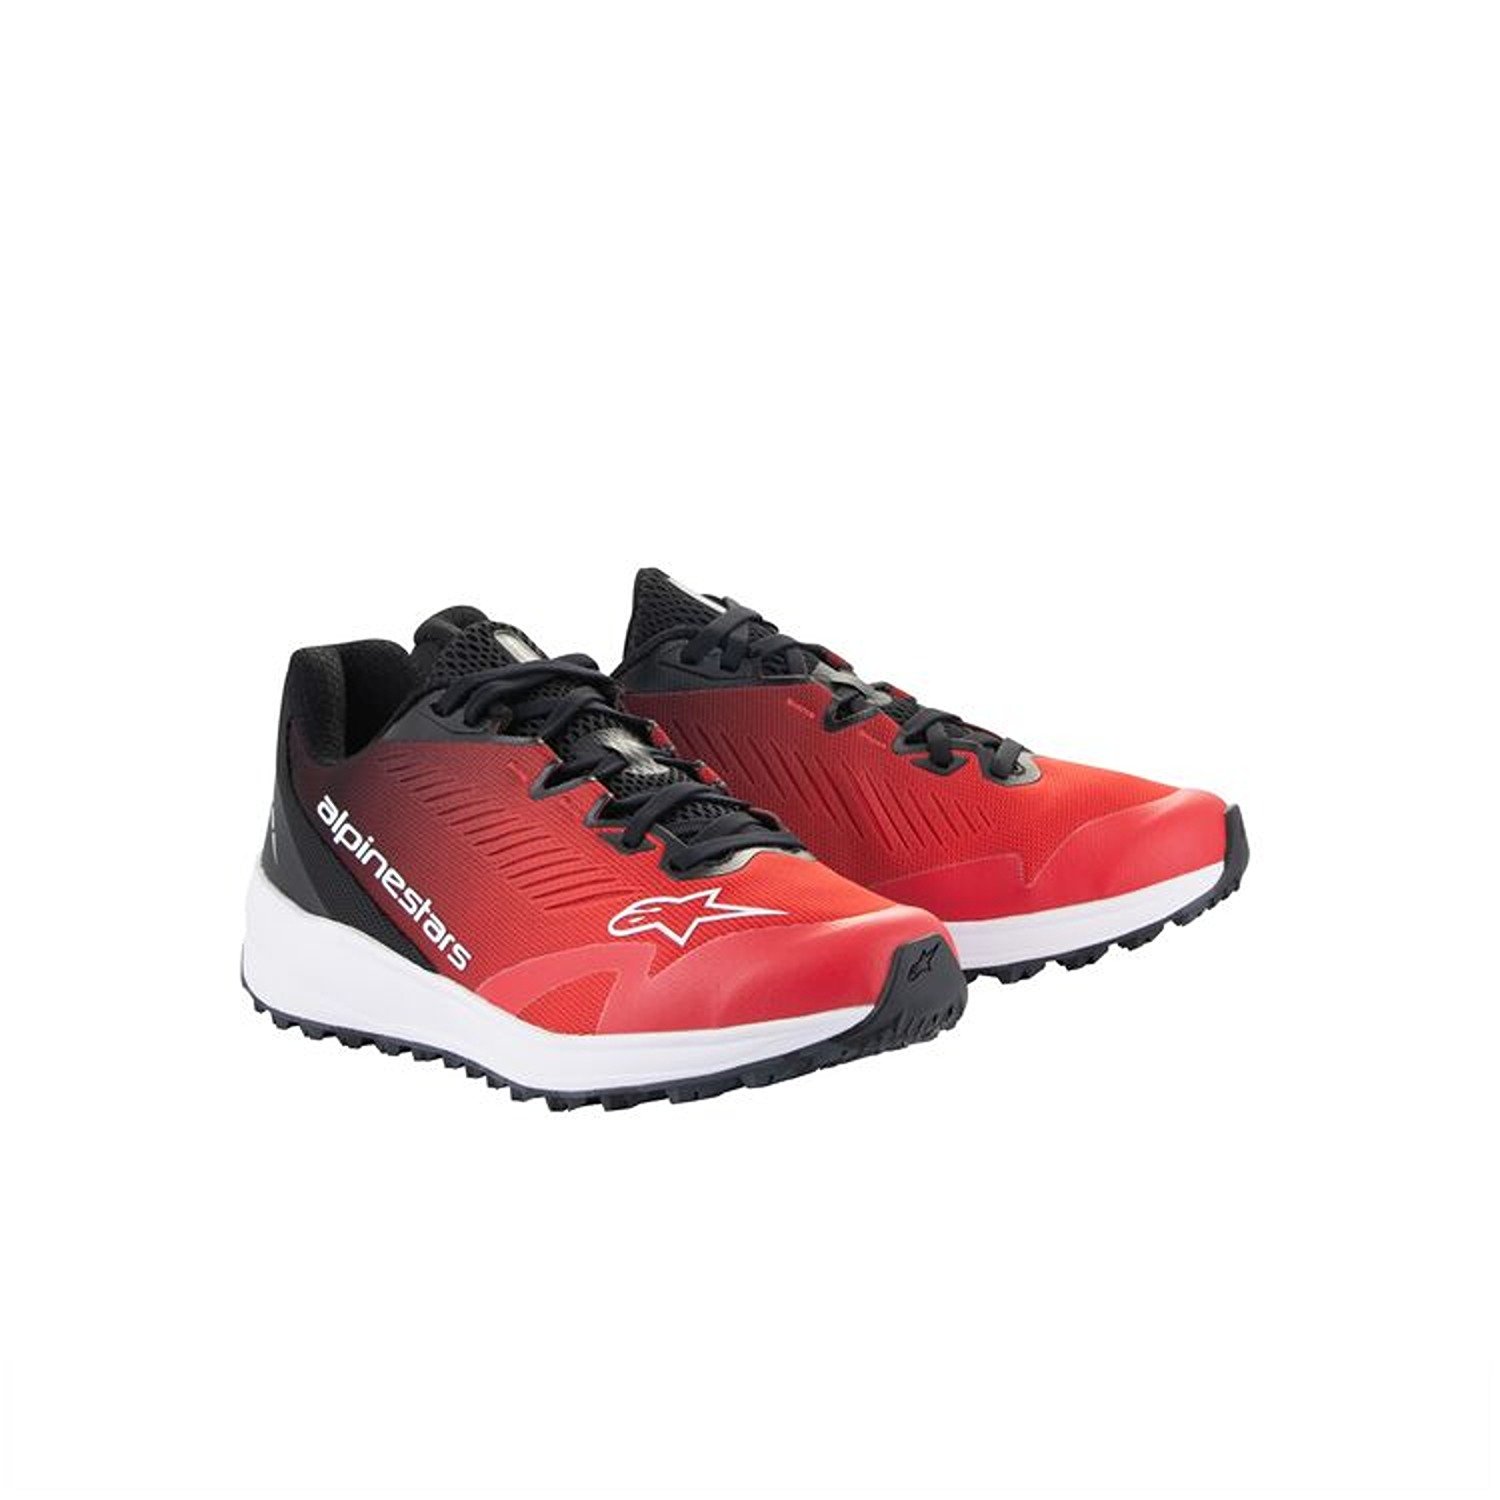 Image of Alpinestars Meta Road V2 Shoes Red Black White Size US 6 EN